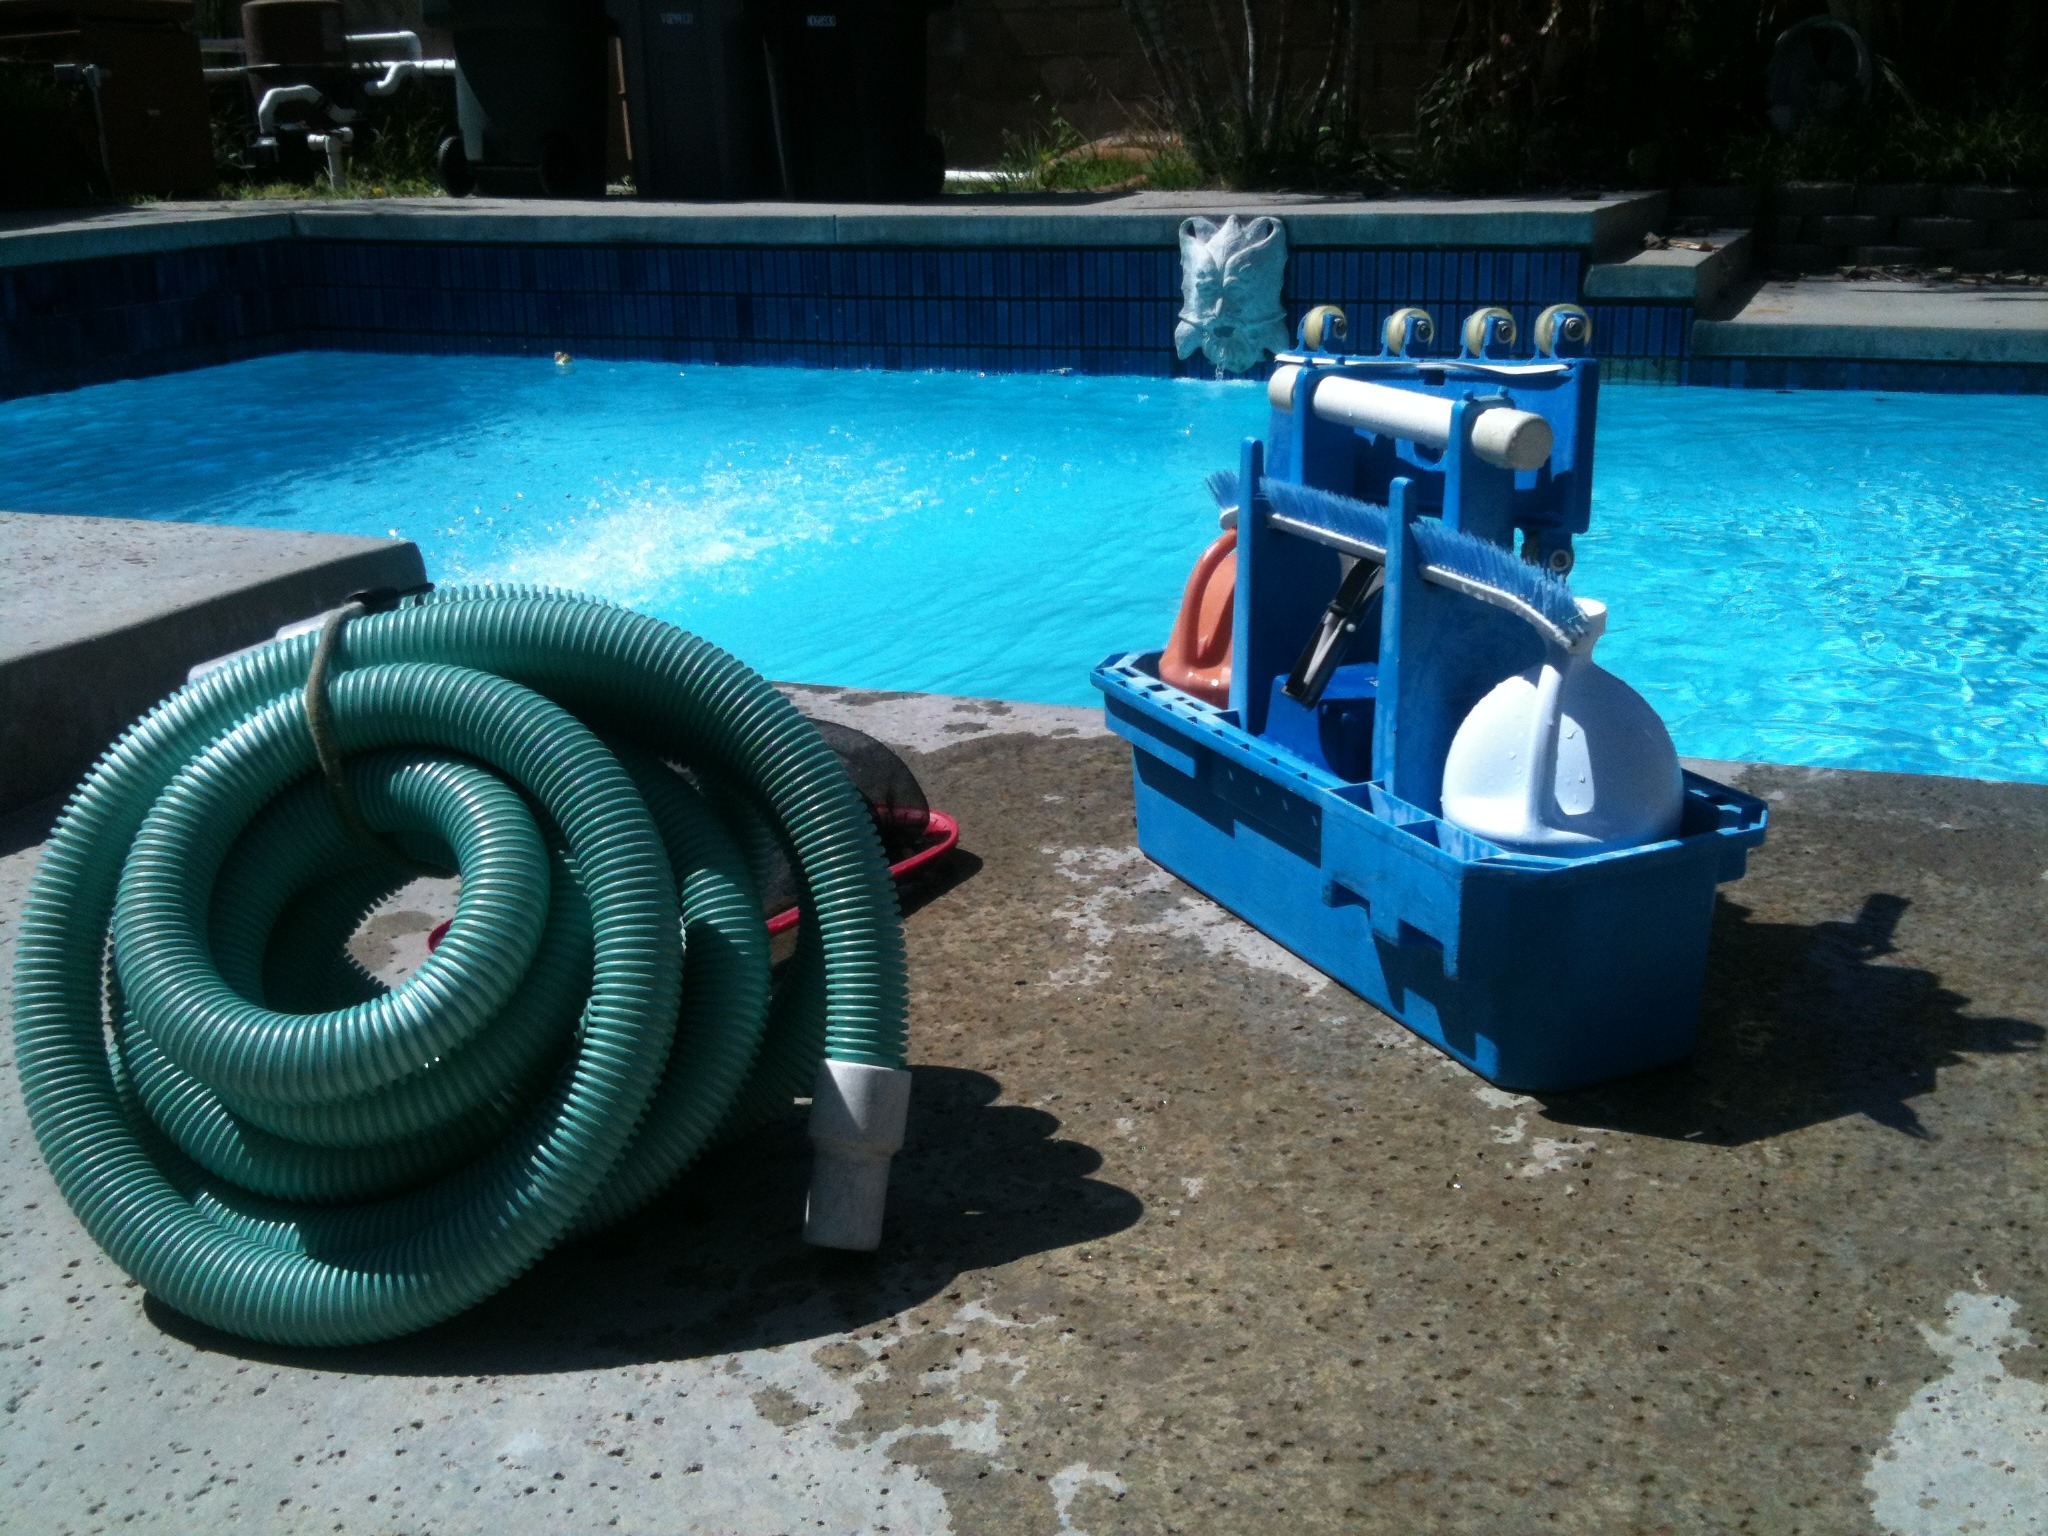 Pool and Equipment Repairs